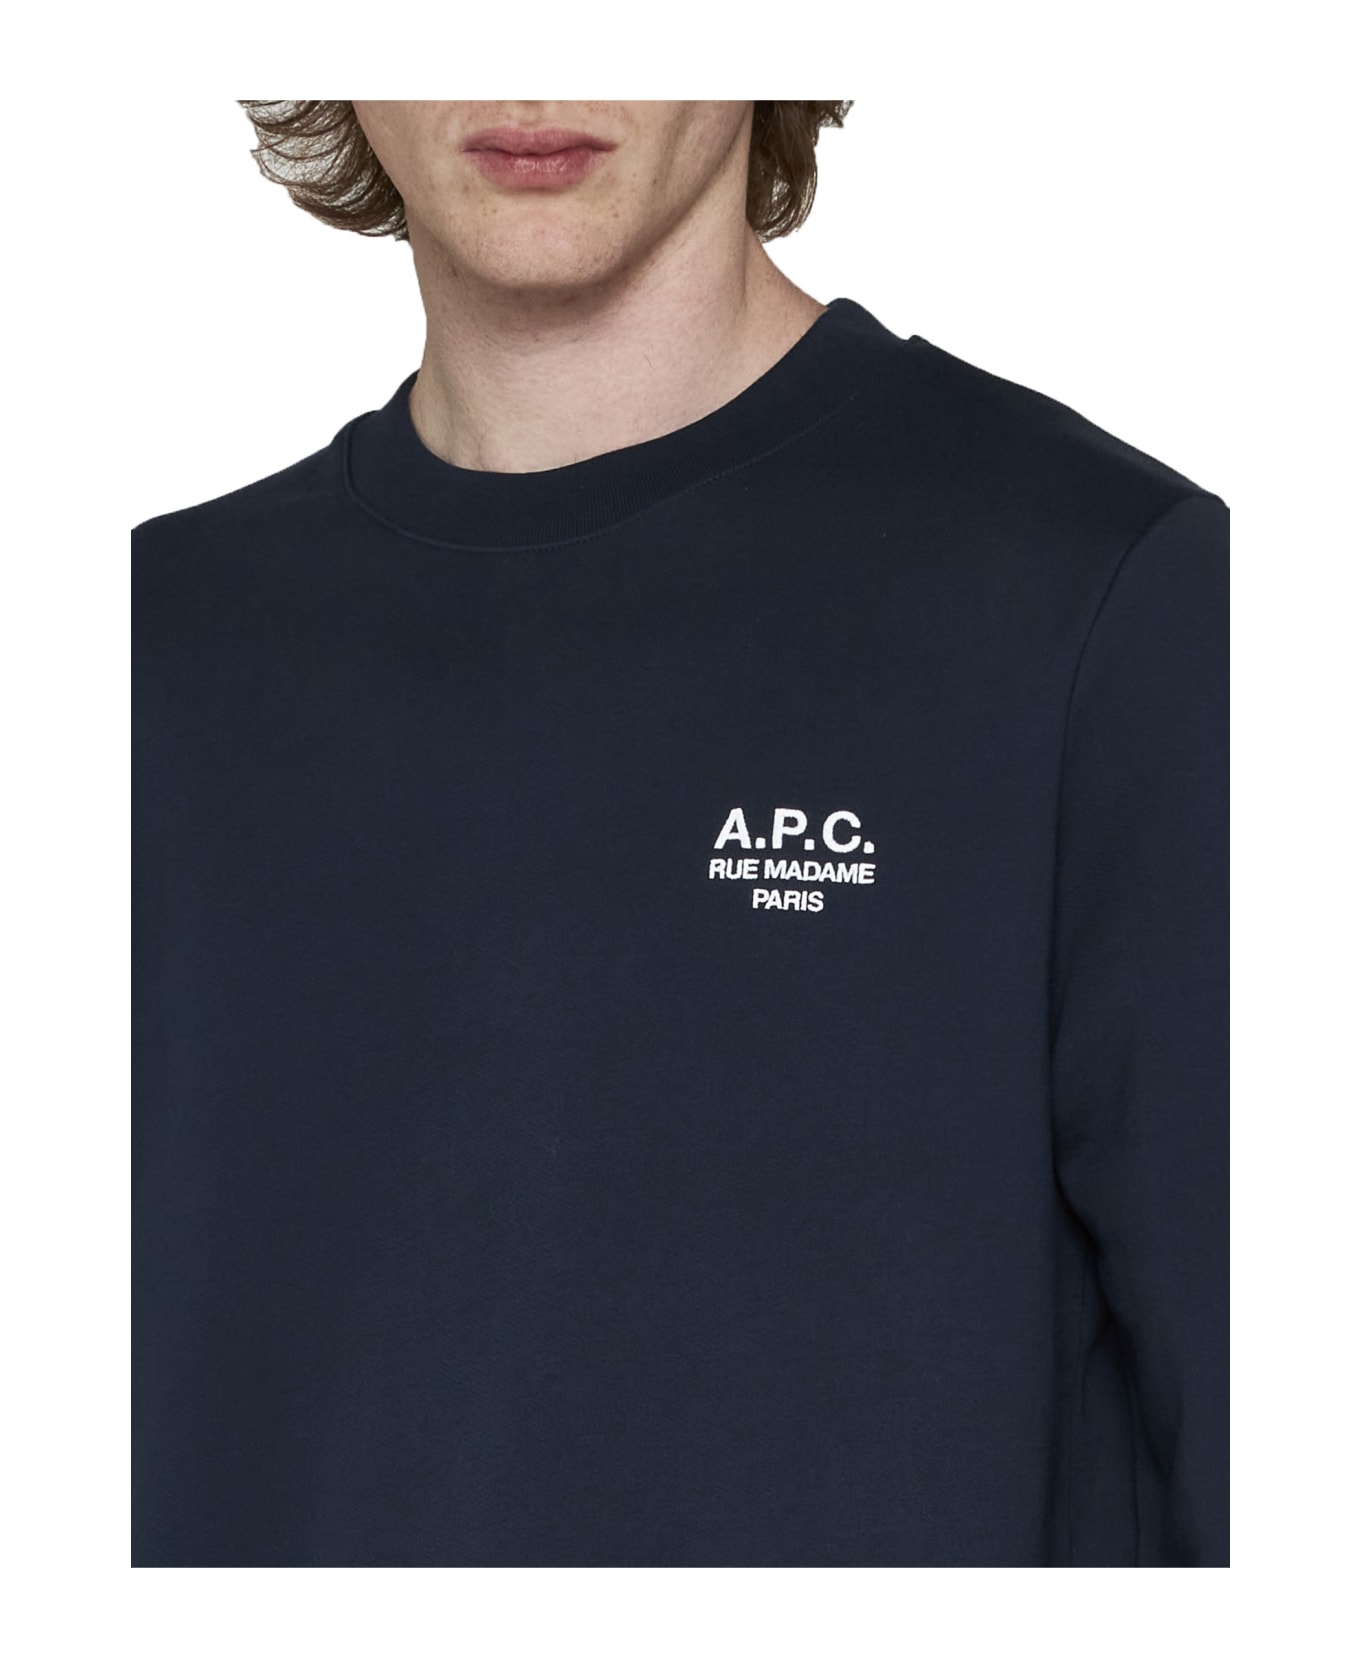 A.P.C. Rider Sweatshirt - Blue